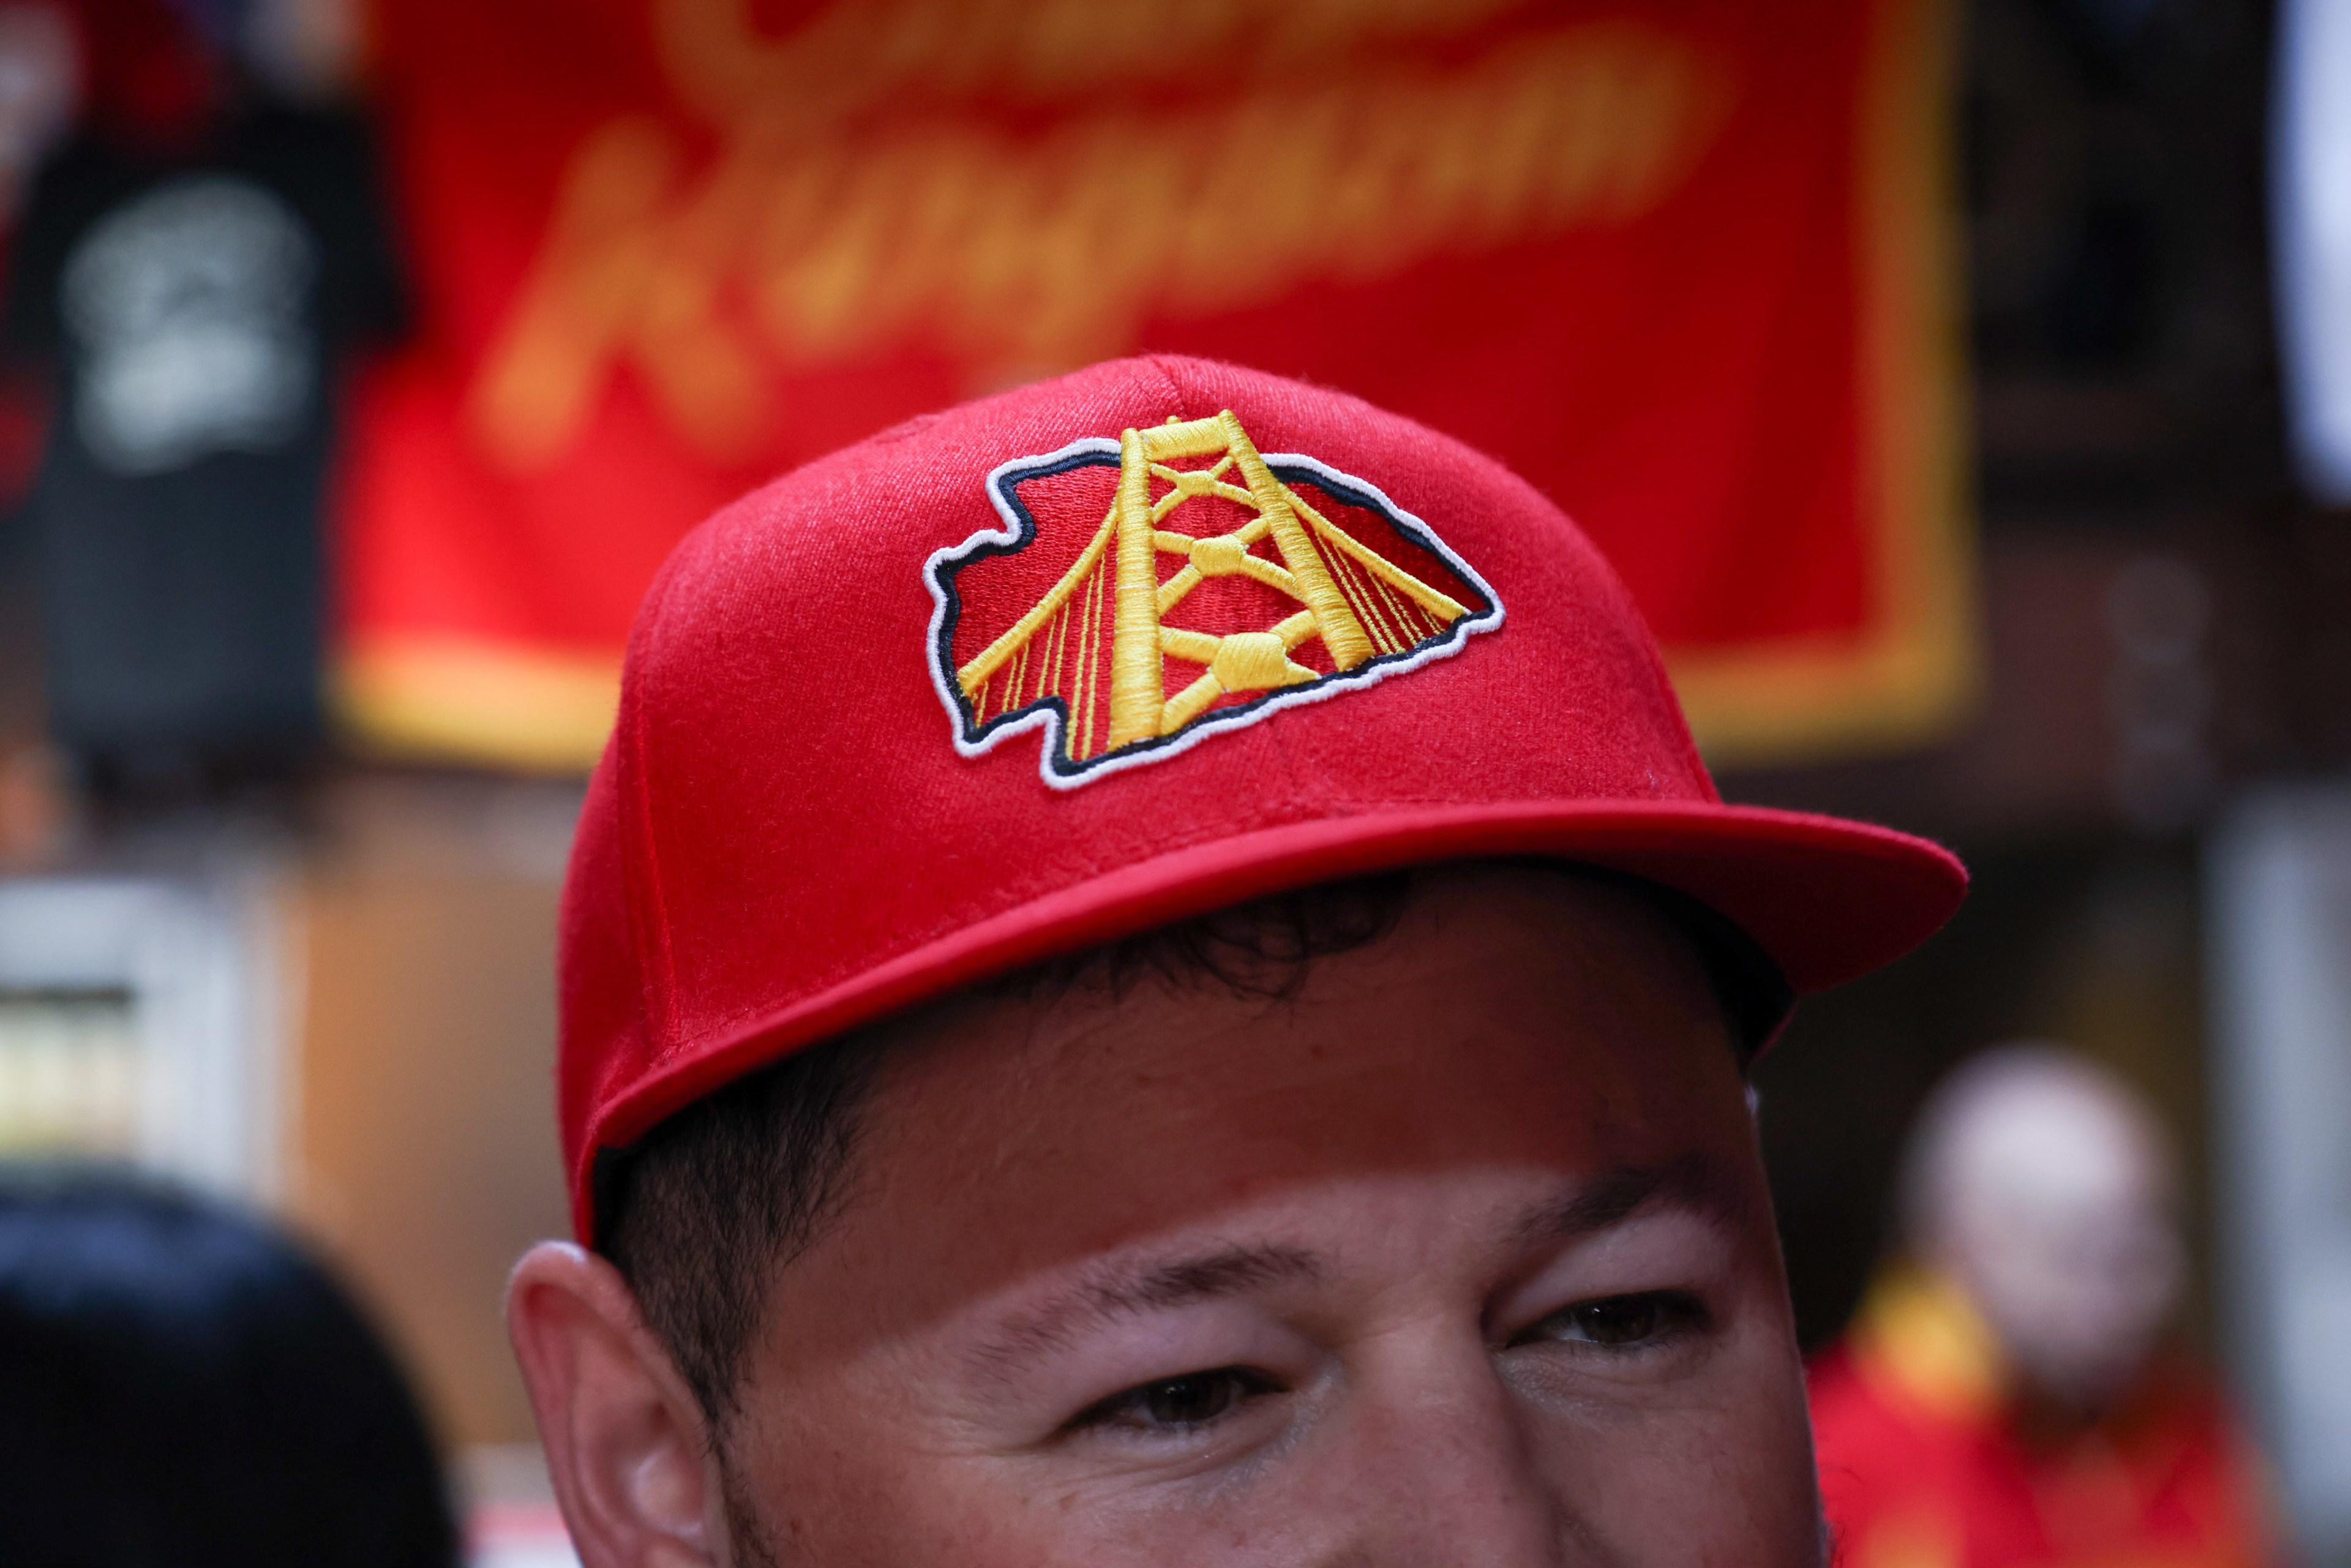 A man shows off red baseball cap with the golden gate bridge in a Kansas City chiefs logo